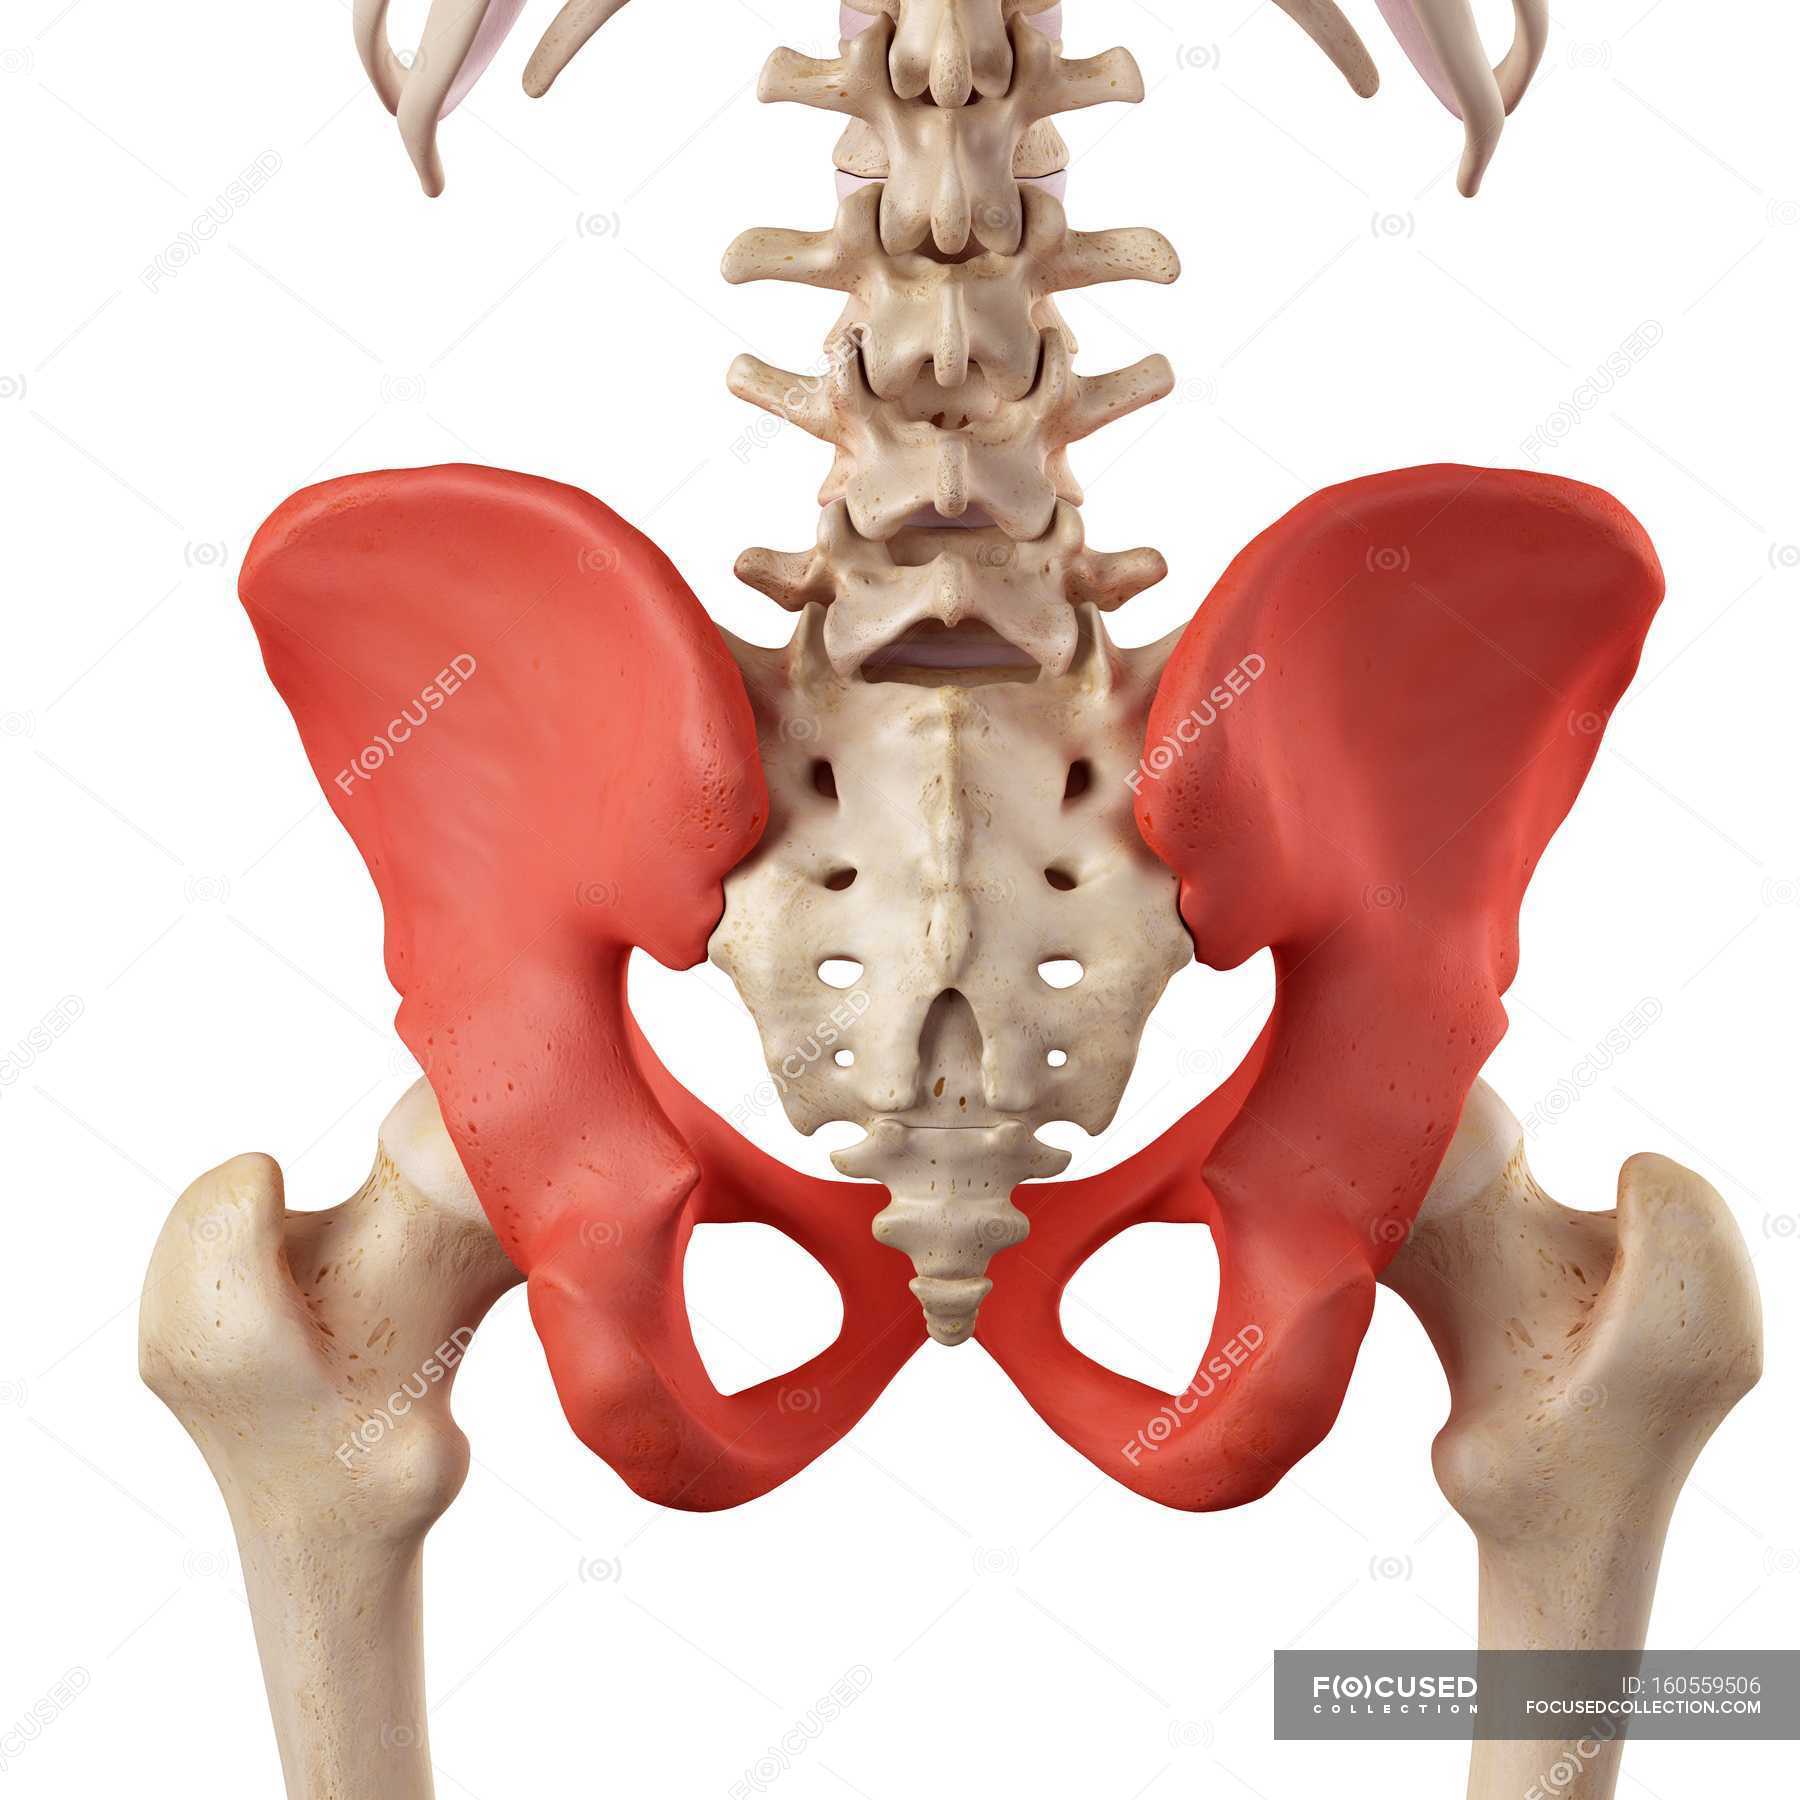 Human hip bones anatomy — white background, rear view - Stock Photo